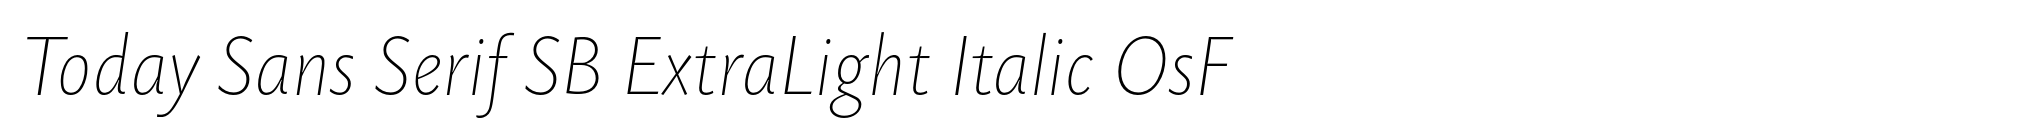 Today Sans Serif SB ExtraLight Italic OsF image